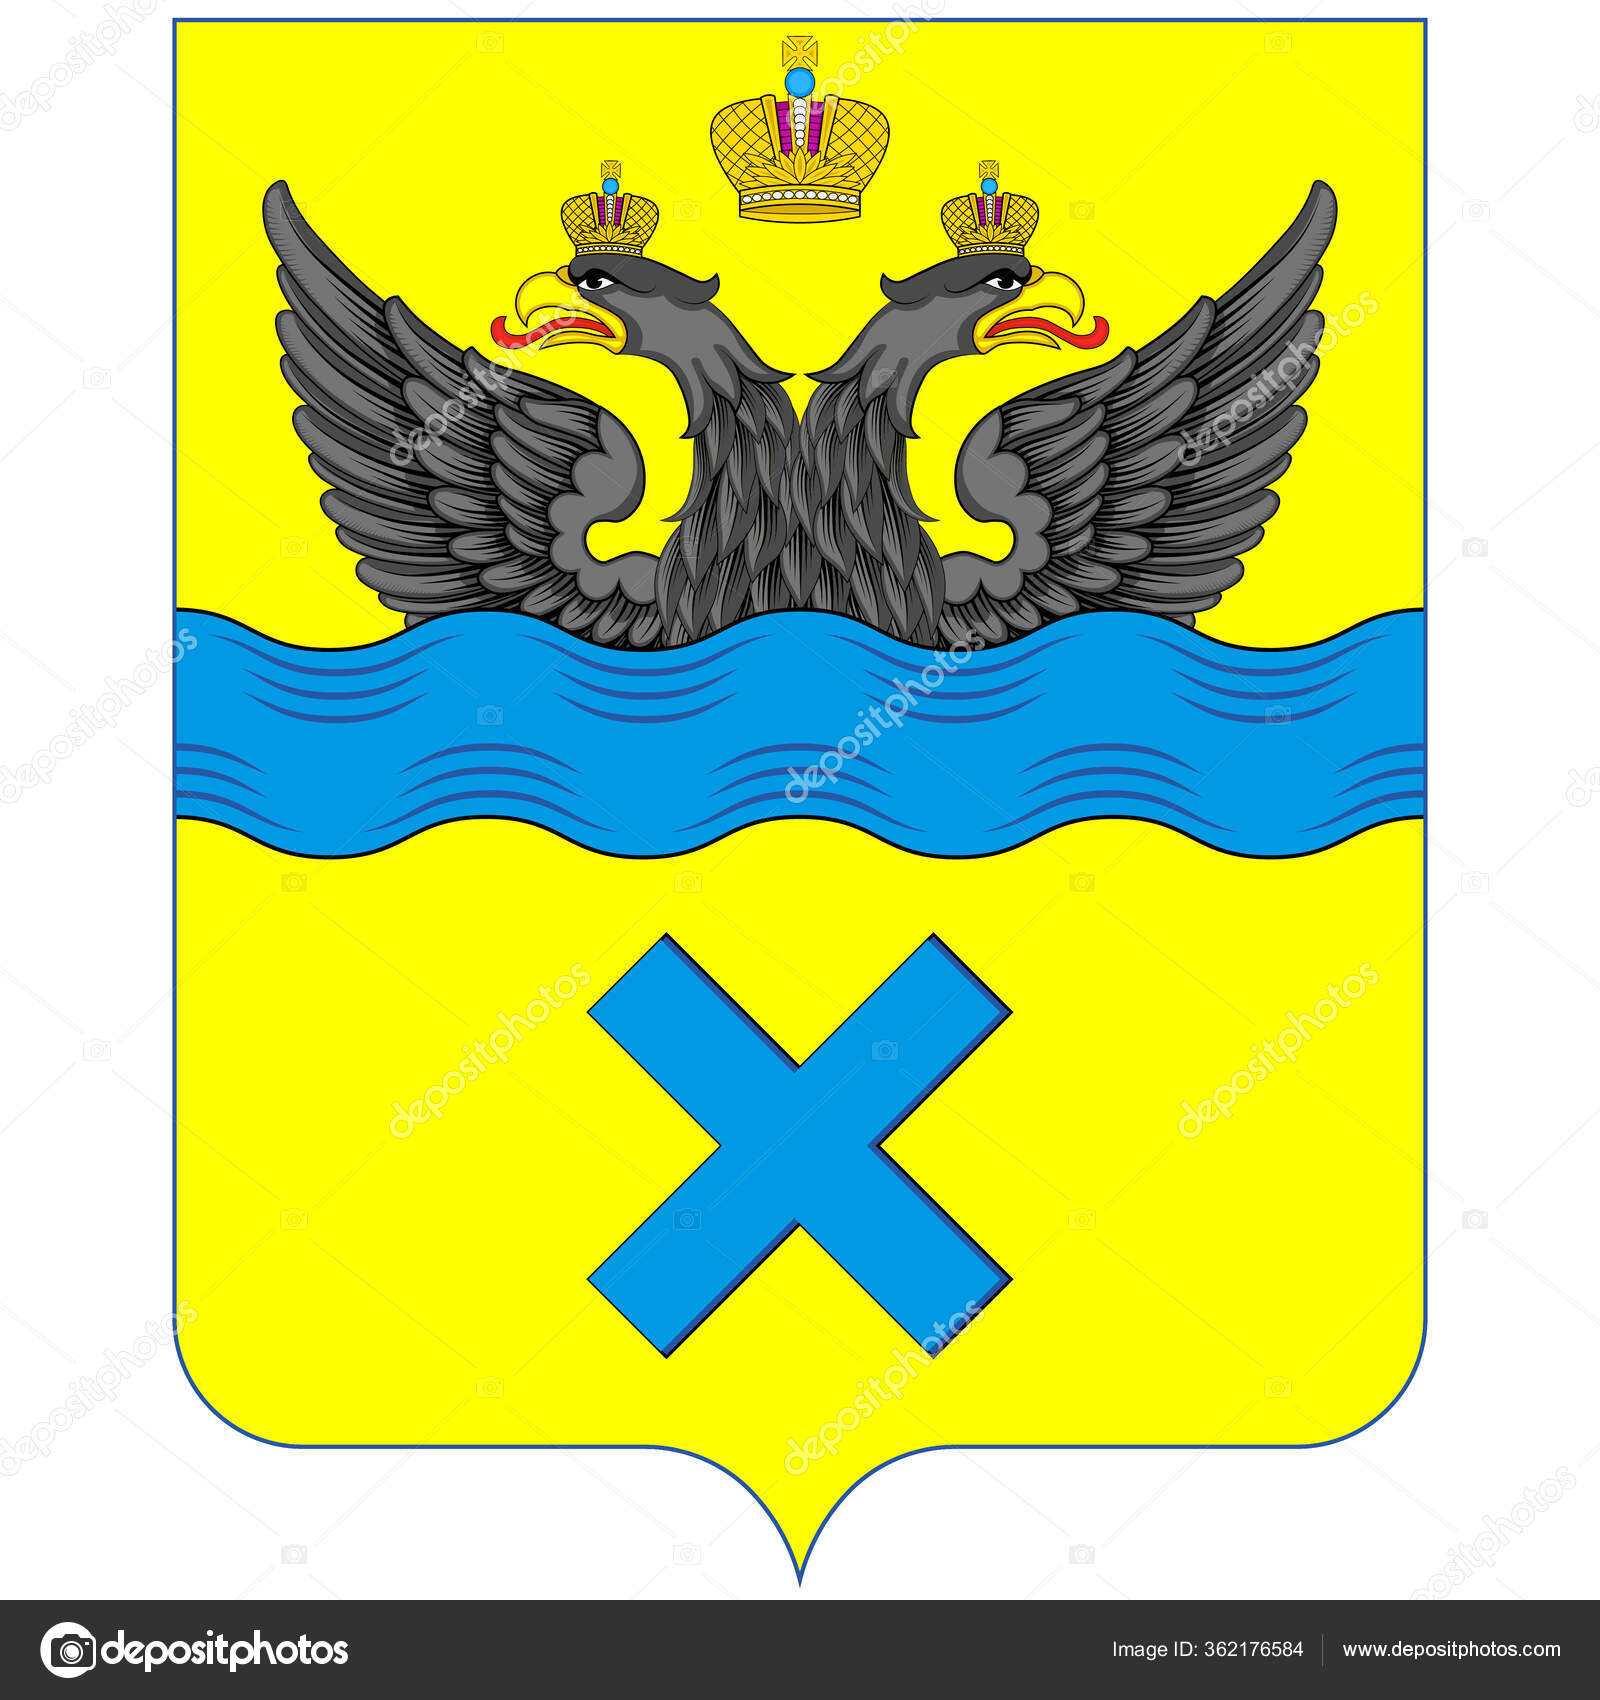 Coat of arms of Orenburg city in Russia